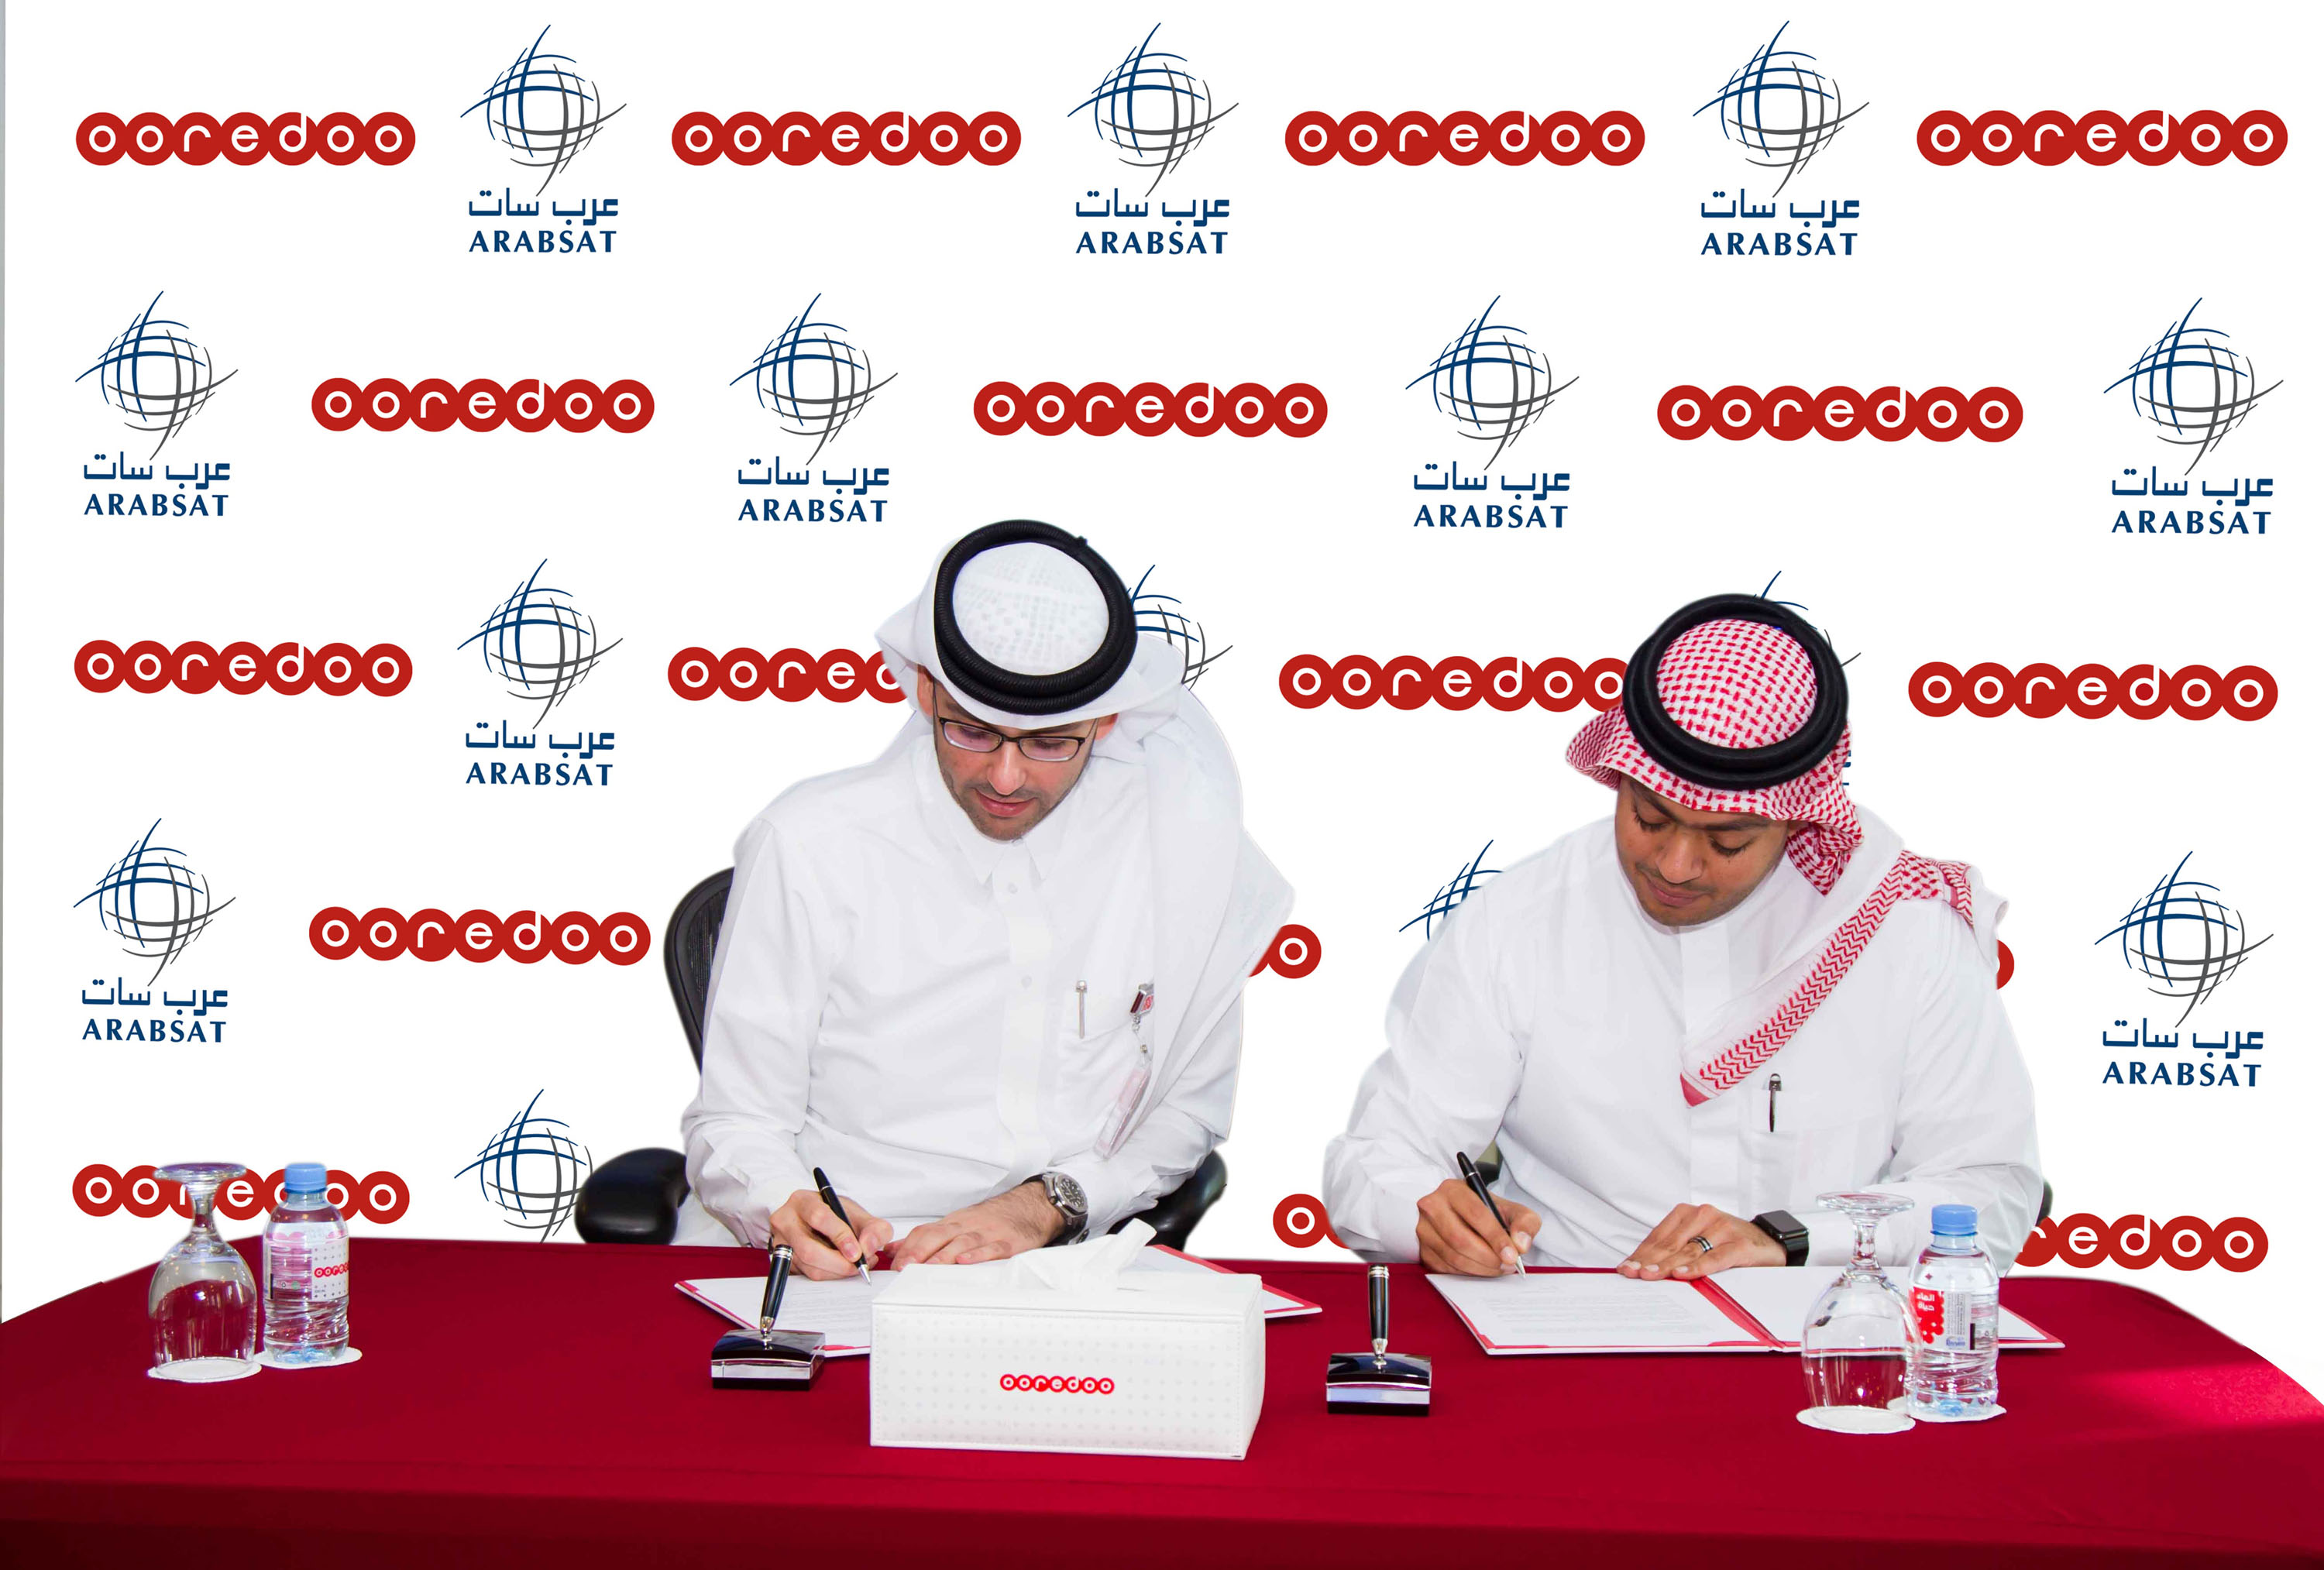 Ooredoo and Arabsat sign major agreement on satellite communications